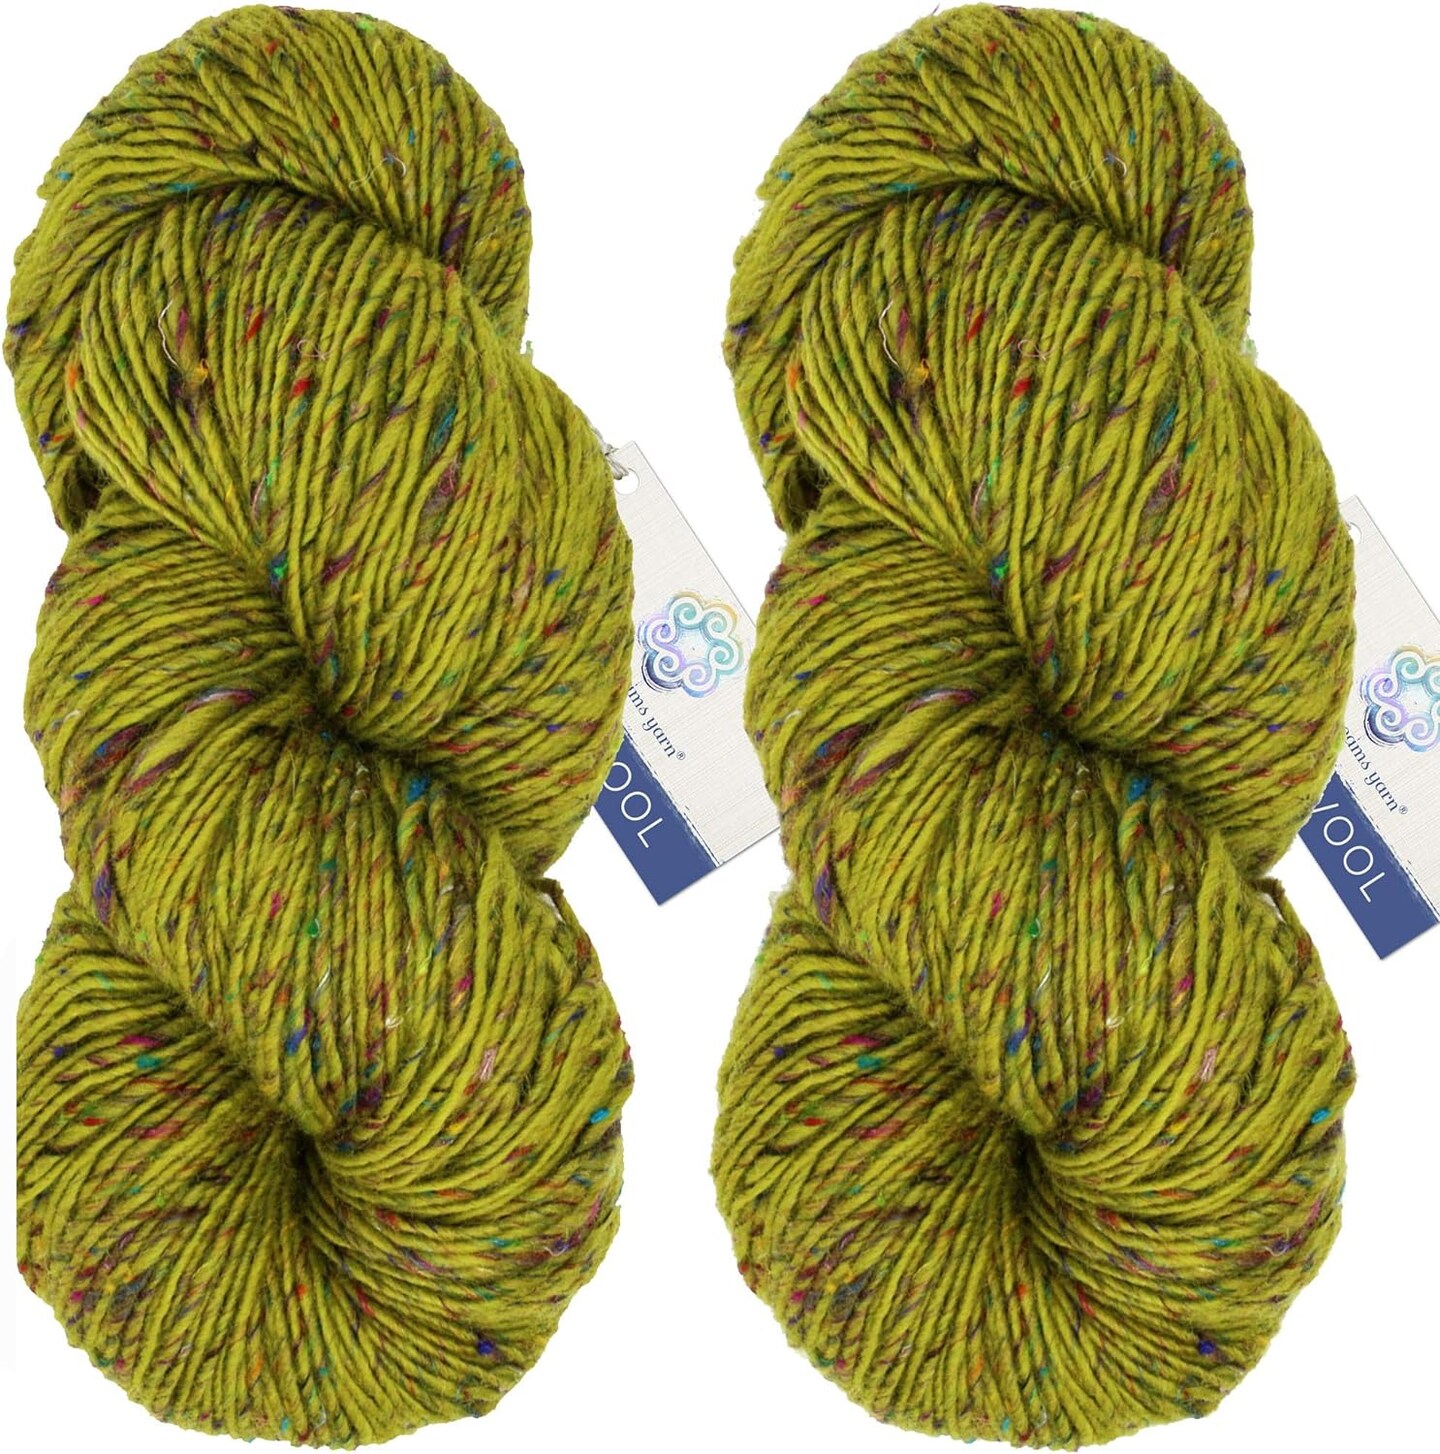 BOLLYWOOL SARI YARN - Merino Wool &#x26; Recycled Sari Silk. Single Ply Lopi Art Yarn. Pacific Northwest Homespun, Soft, Squishy. Color: Dakini